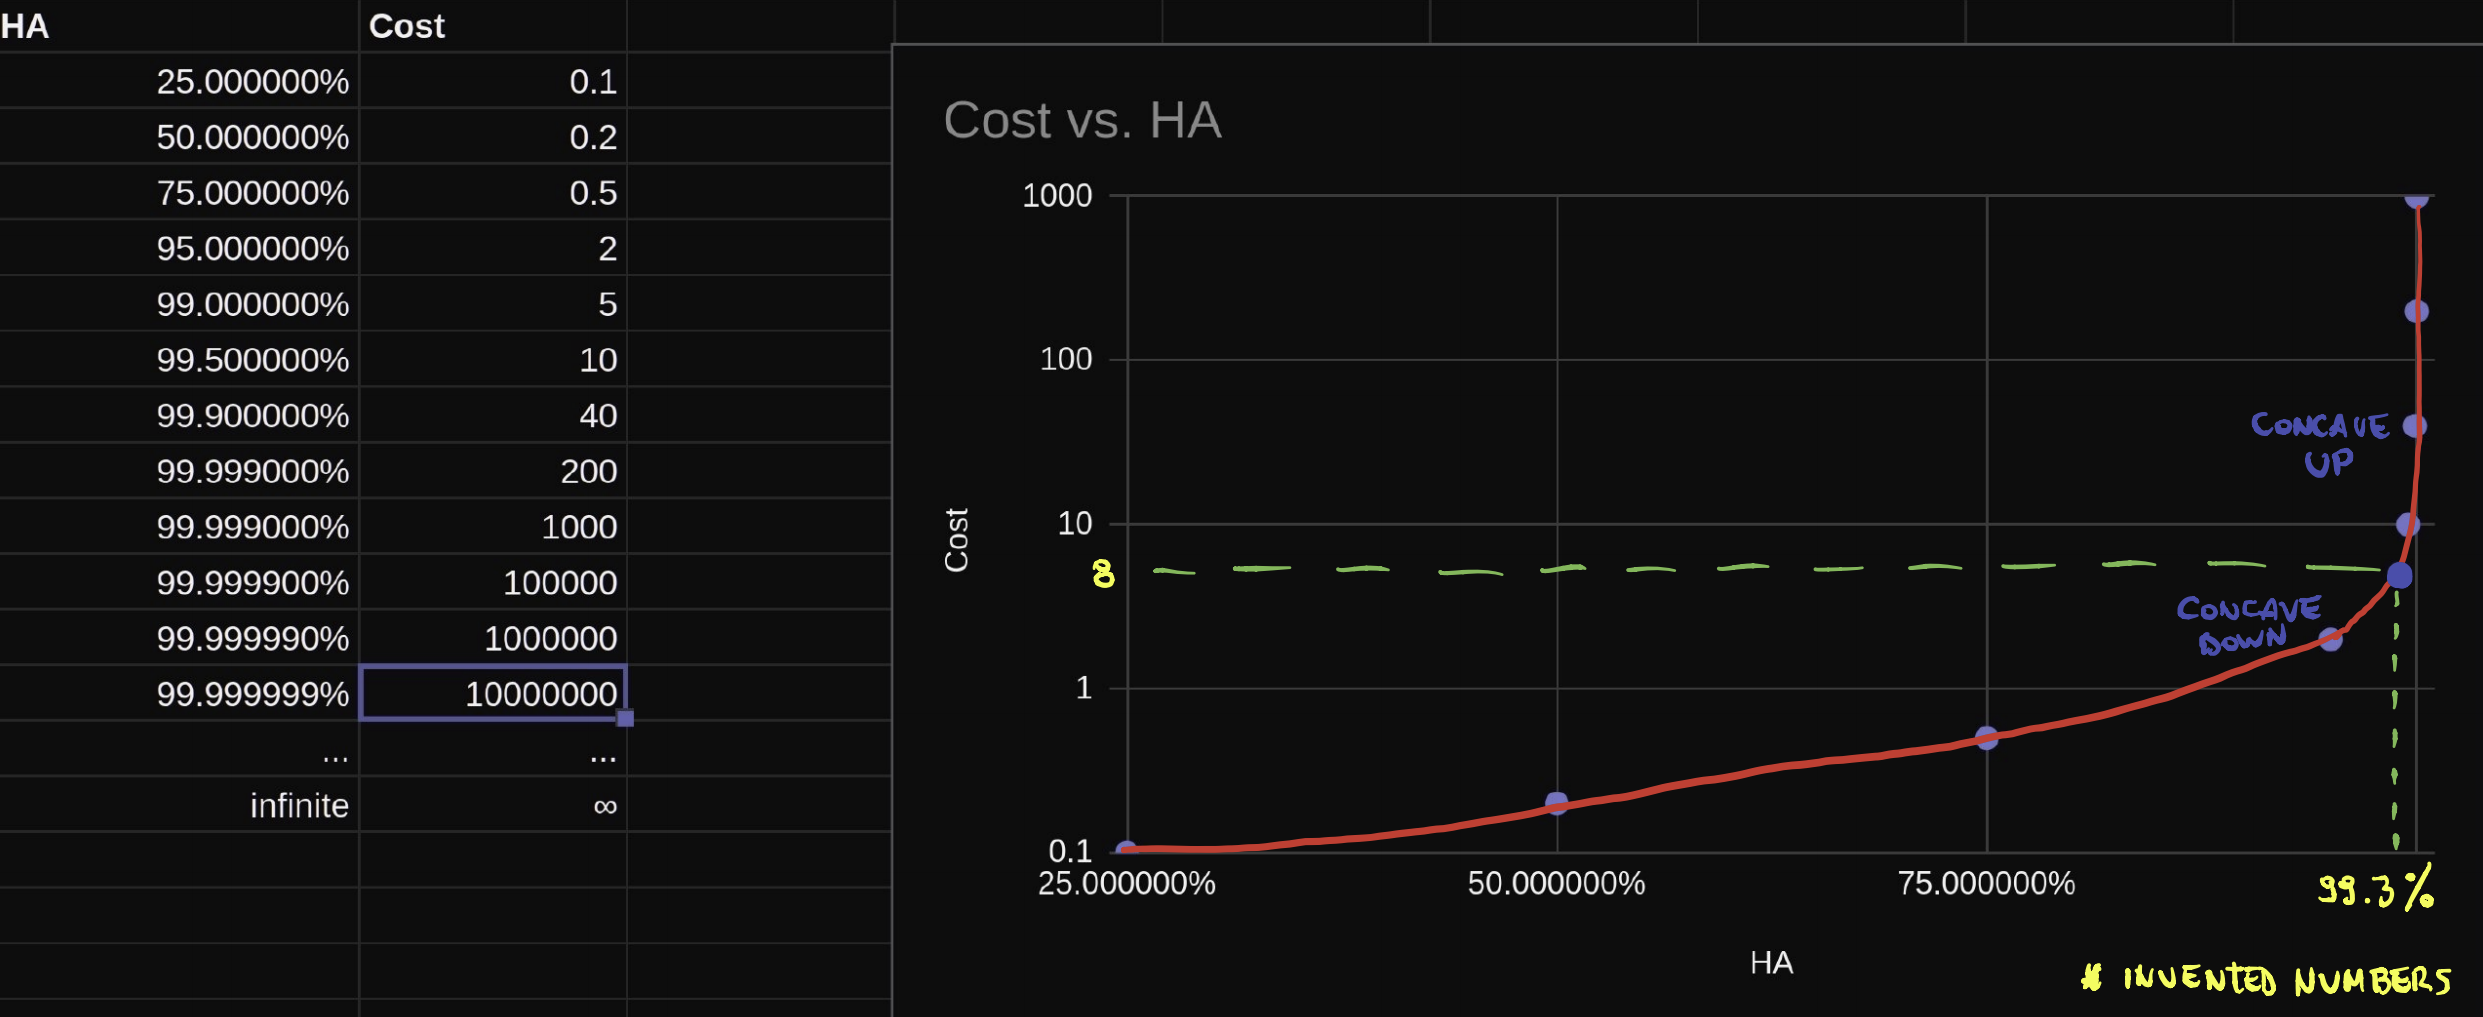 Cost vs HA